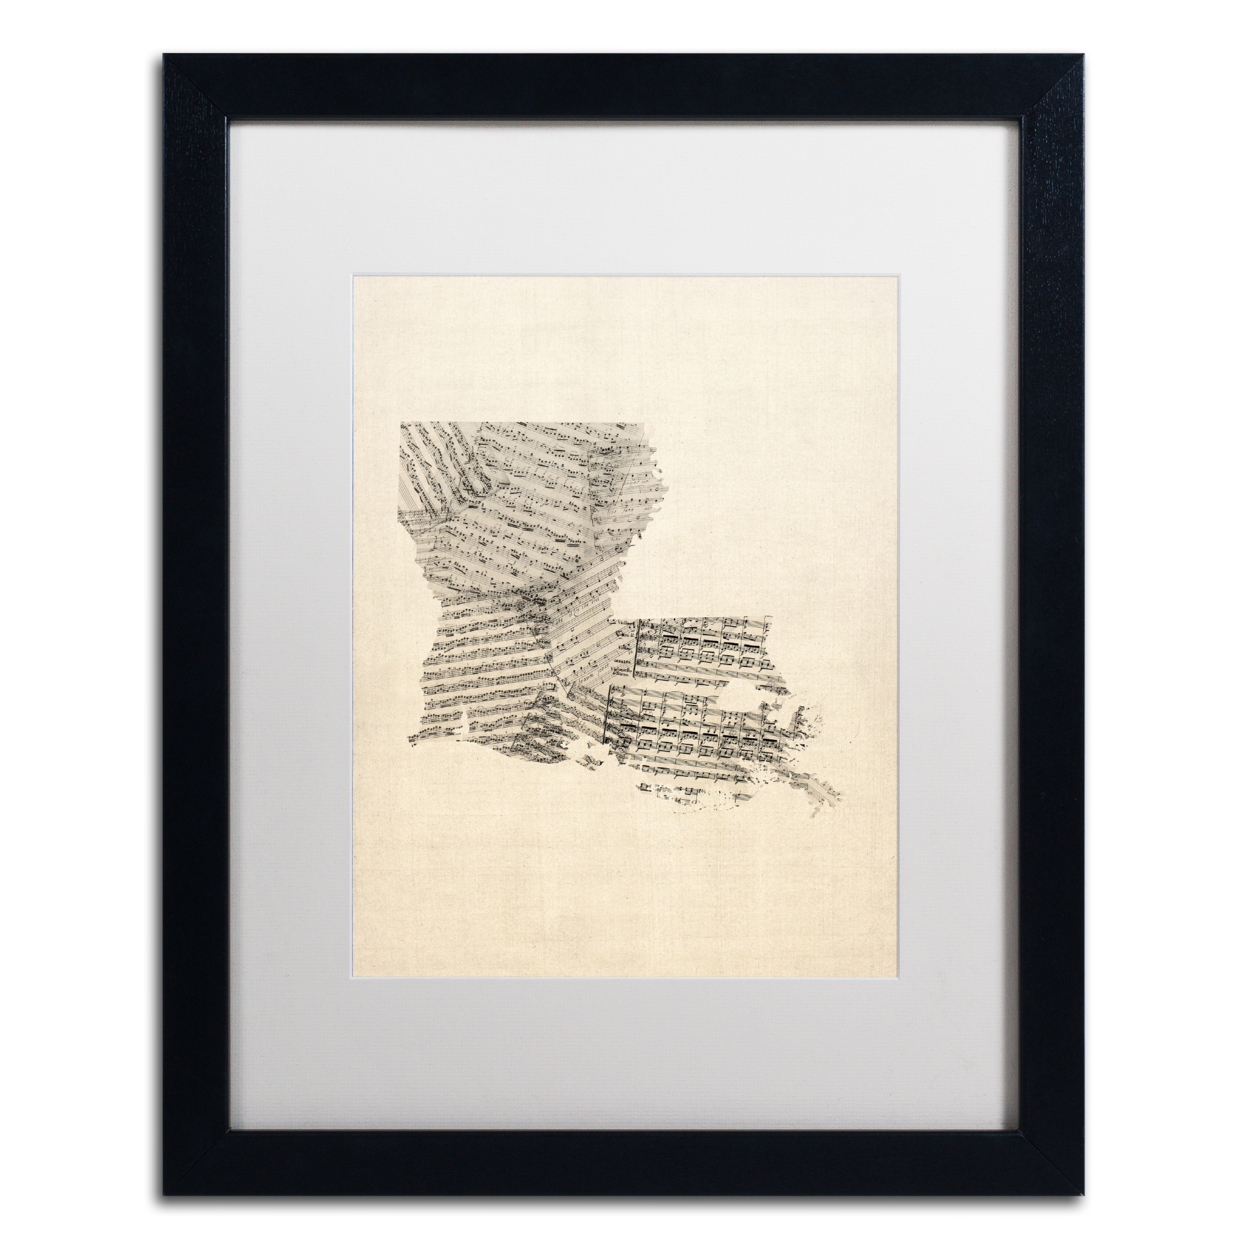 Michael Tompsett 'Old Sheet Music Map Of Louisiana' Black Wooden Framed Art 18 X 22 Inches